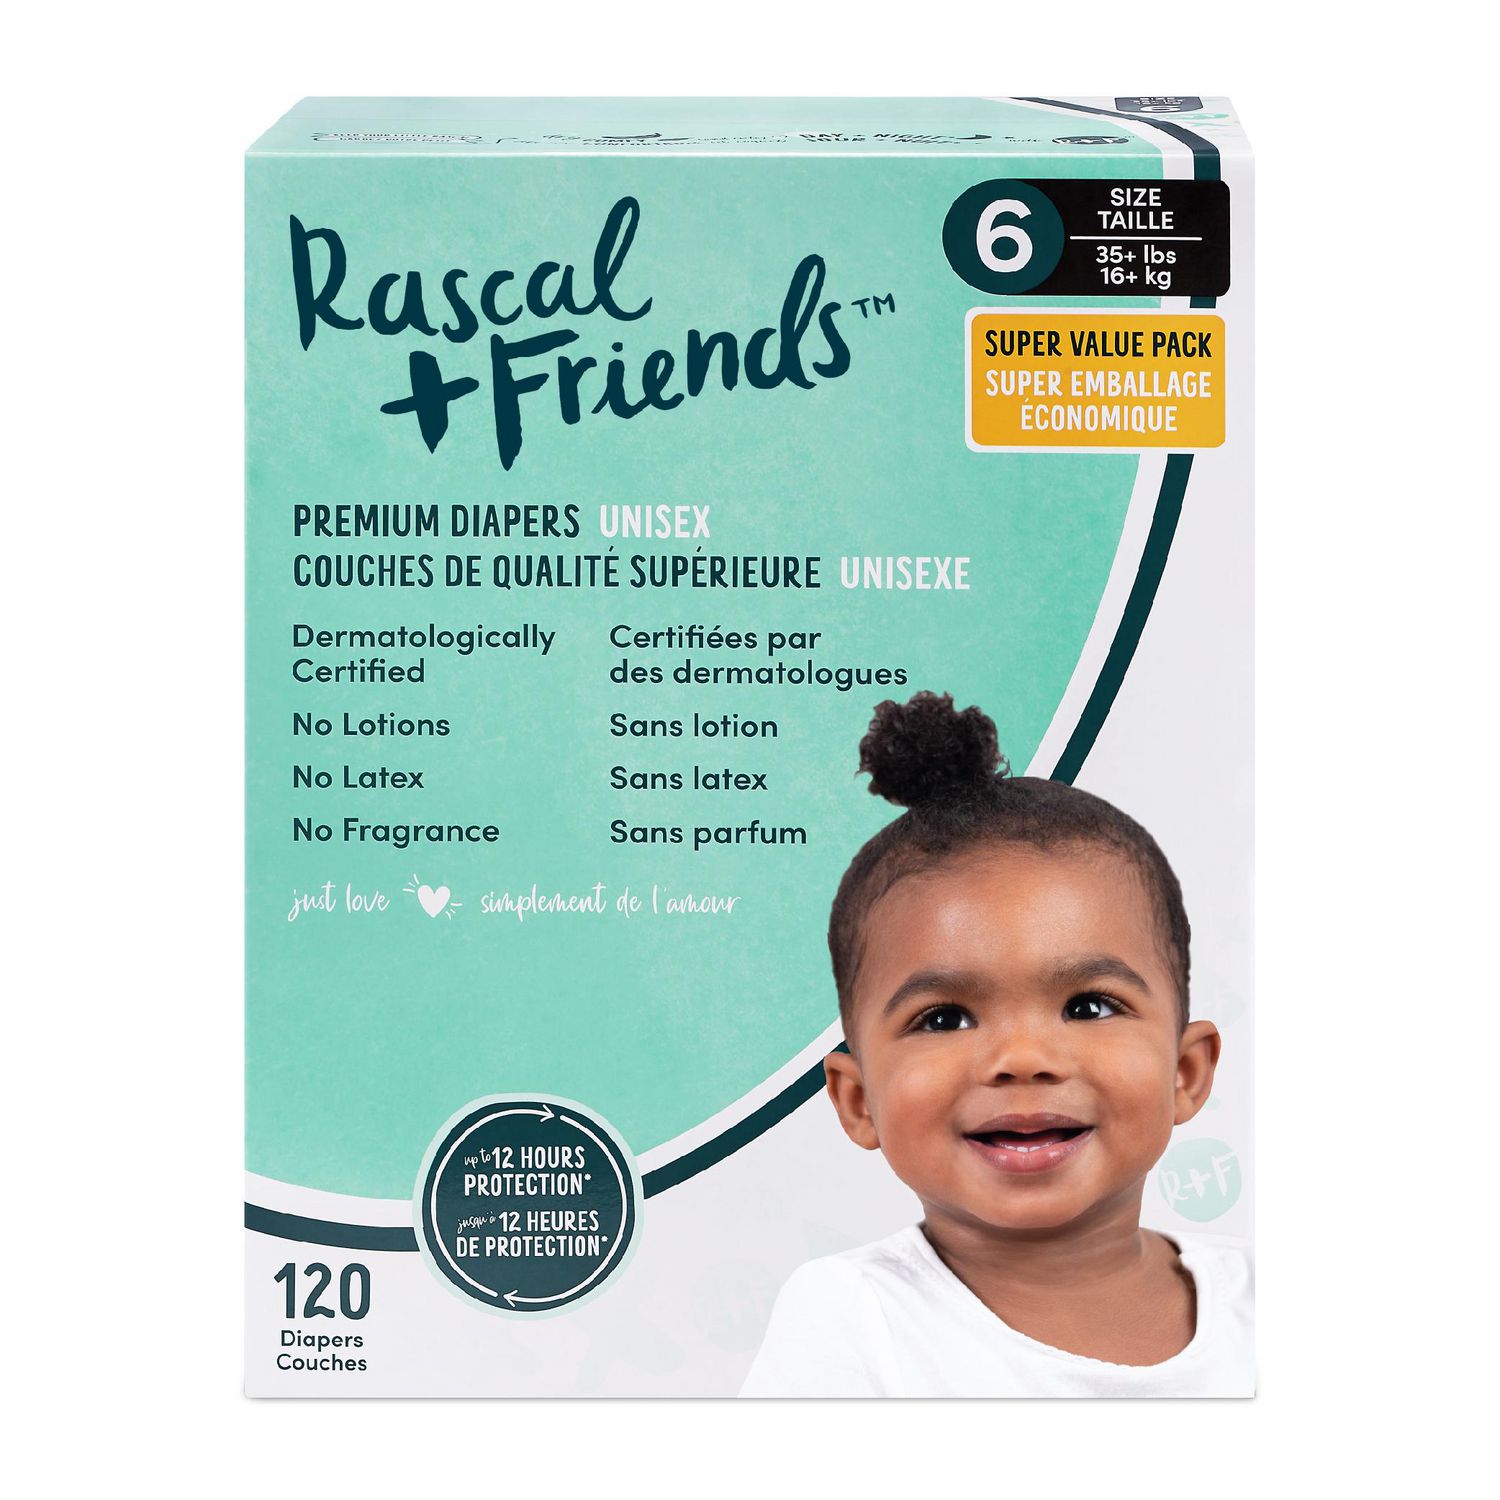 Rascal + Friends Premium Diapers - Super Value Pack 